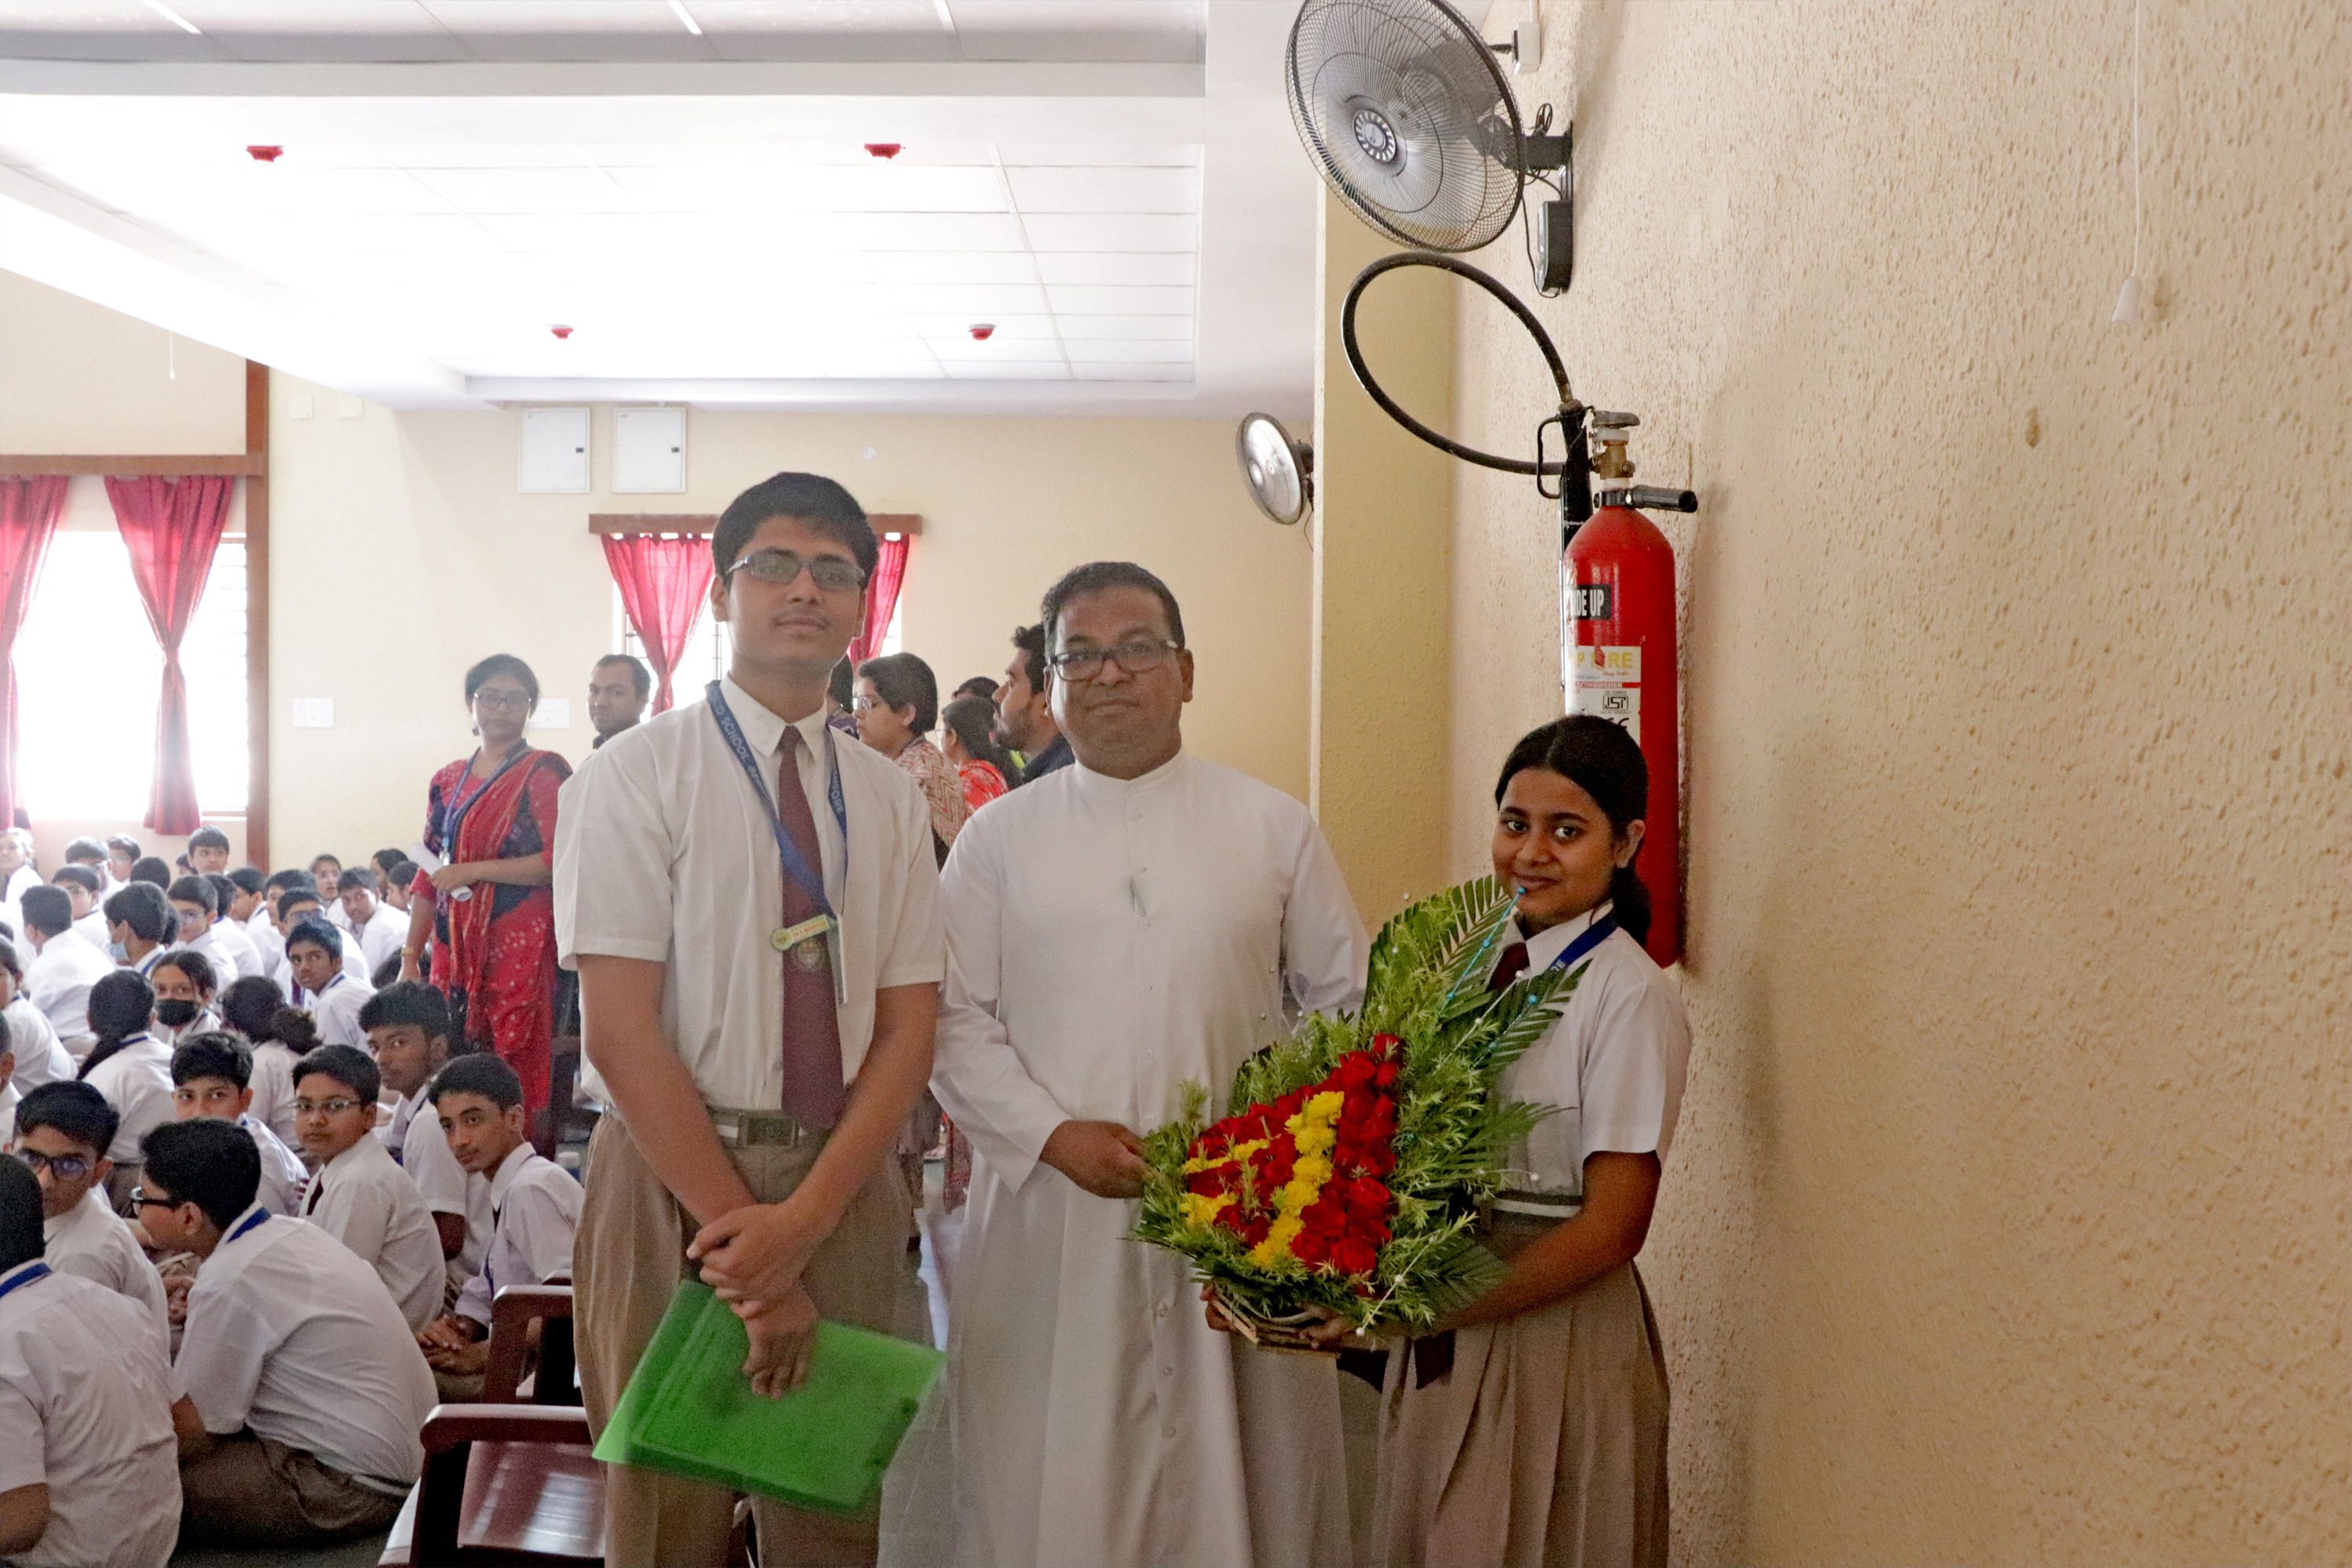 Birthday celebration of Fr. Principal